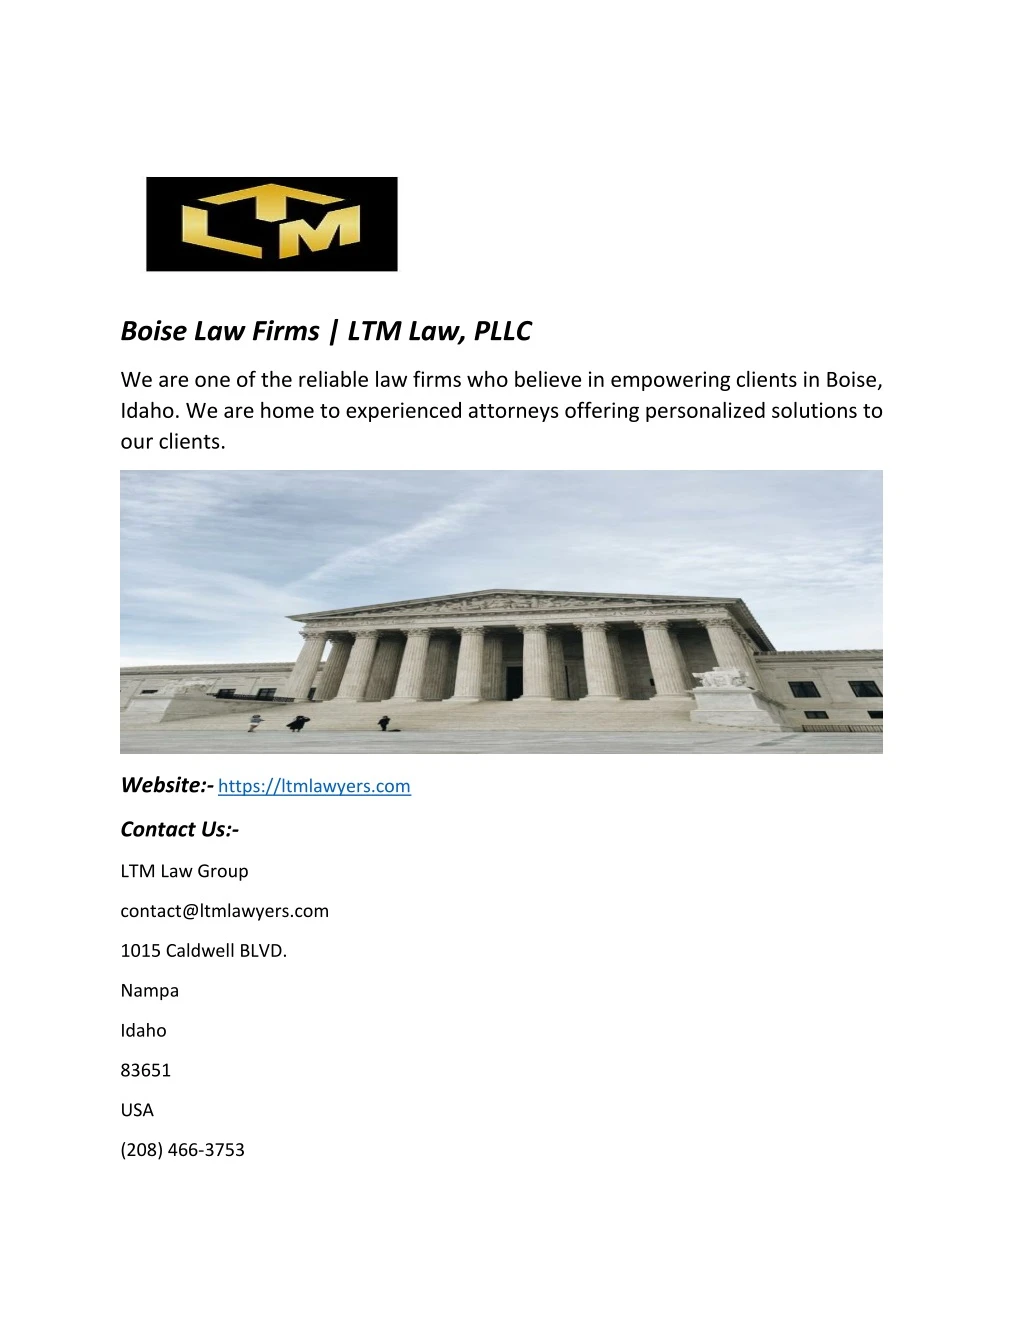 boise law firms ltm law pllc